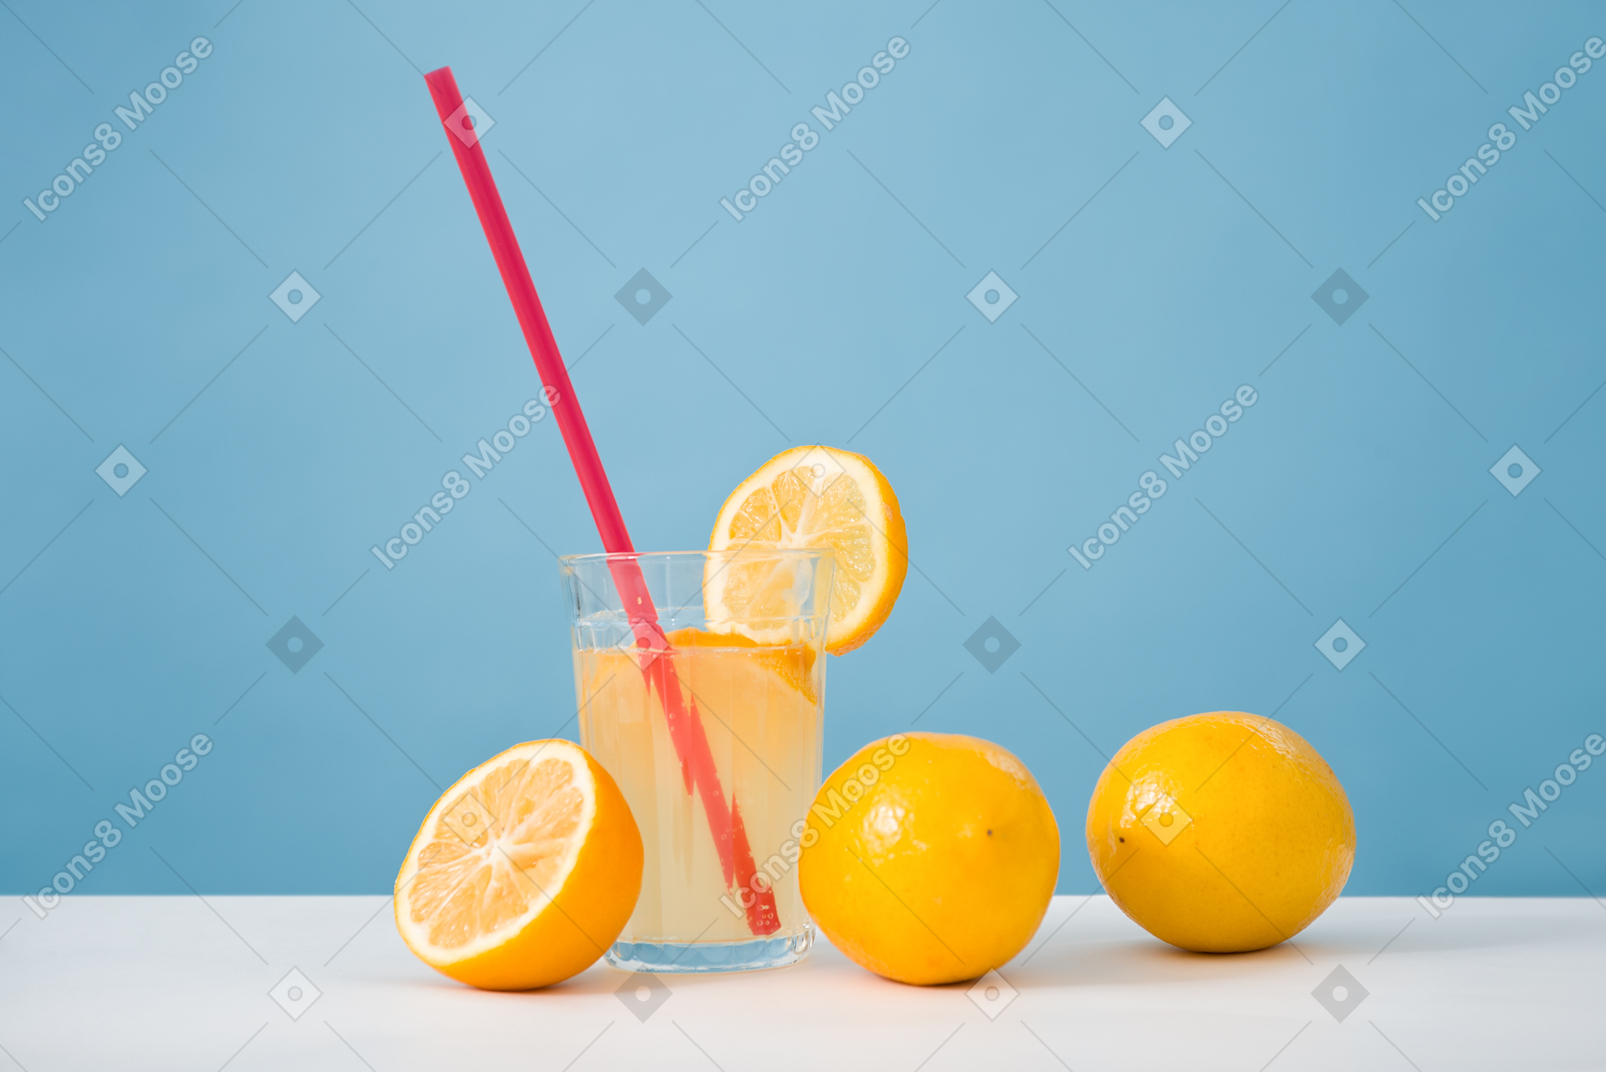 Jugo de limón recién exprimido